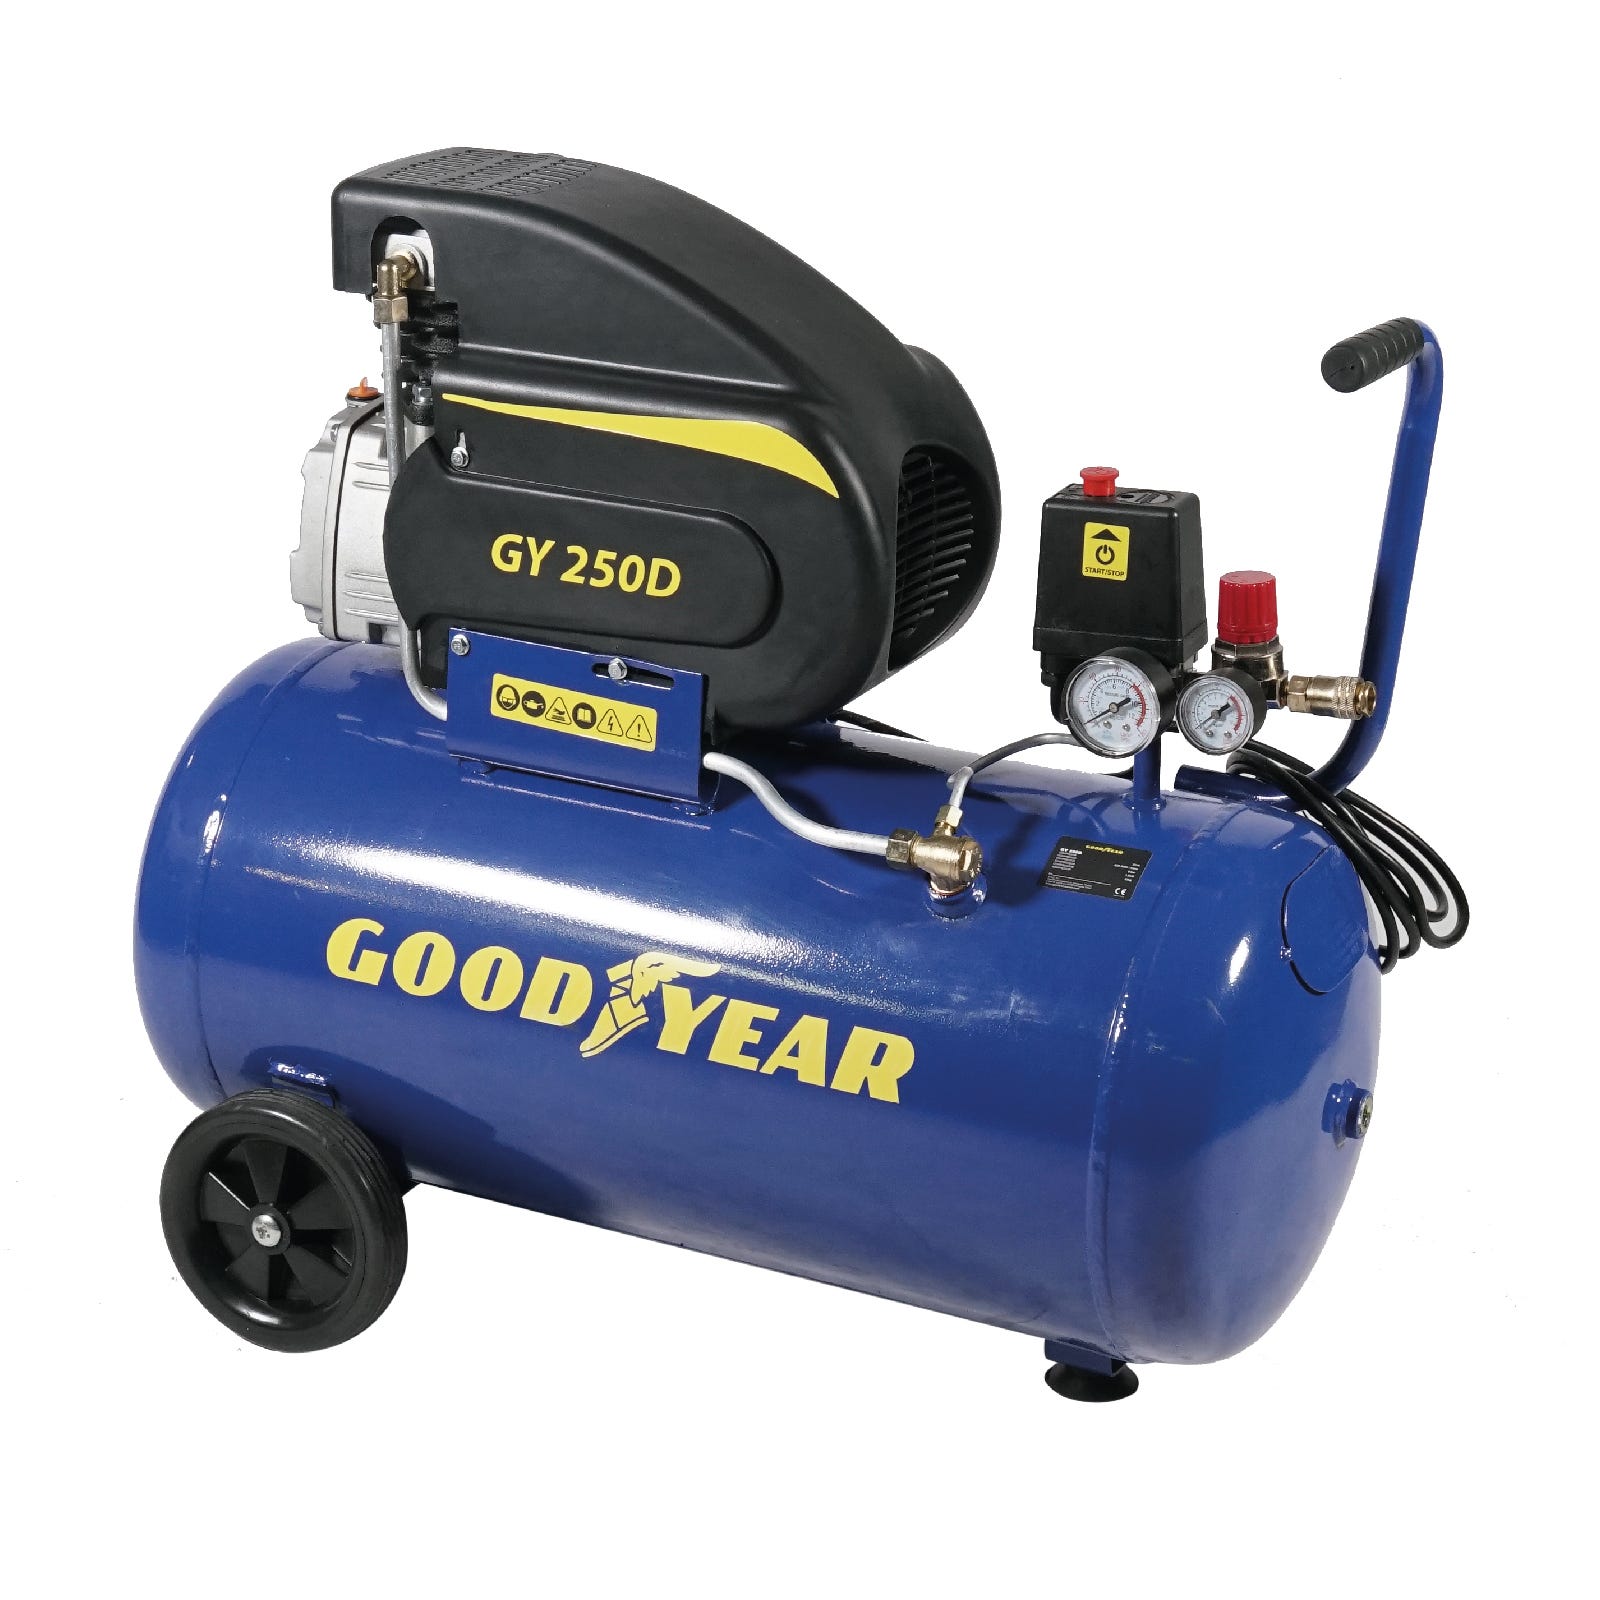 Goodyear - Compresor de Aire 50 Litros. Capacidad de Aspiración 210  litros/minuto. 2.800 rpm. Presión Nominal 8 bares/115 PSI. Protección  Sobrecarga.